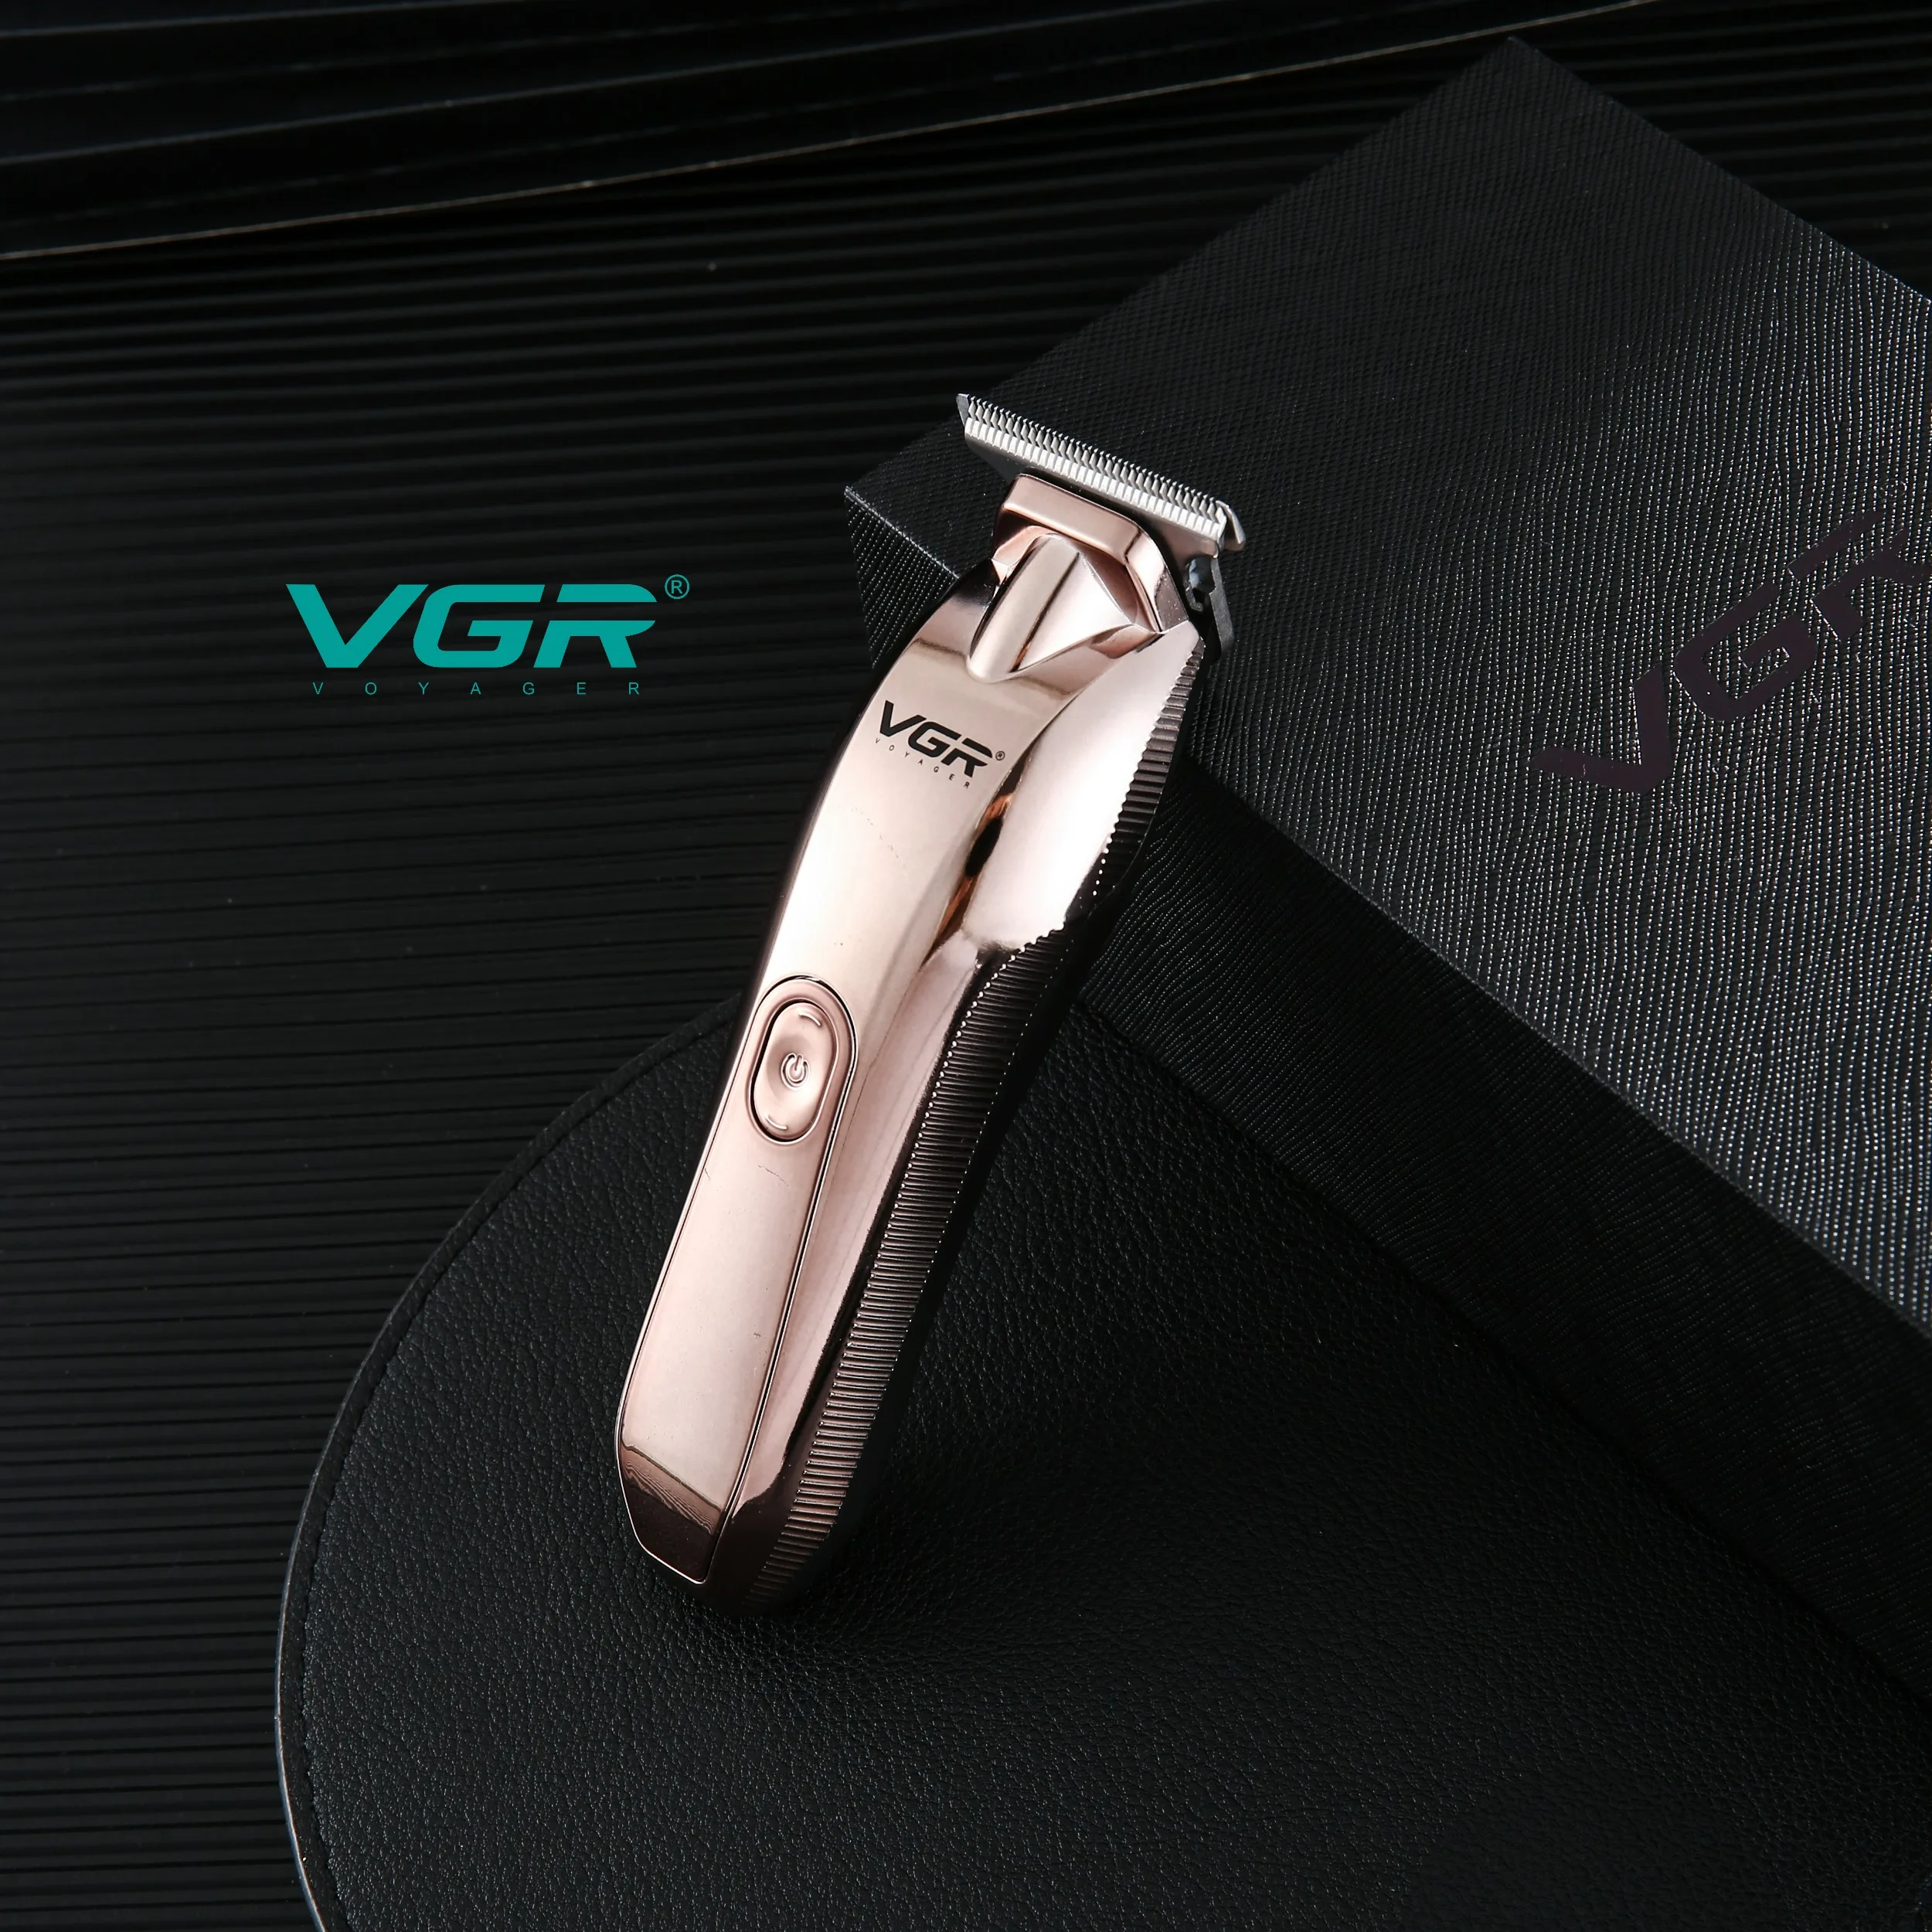 VGR Hair Cutting Machine Professional Electric Hair Clipper For Men Portable Hair Trimmer LED Digital Display USB Charging V-293 enlarge